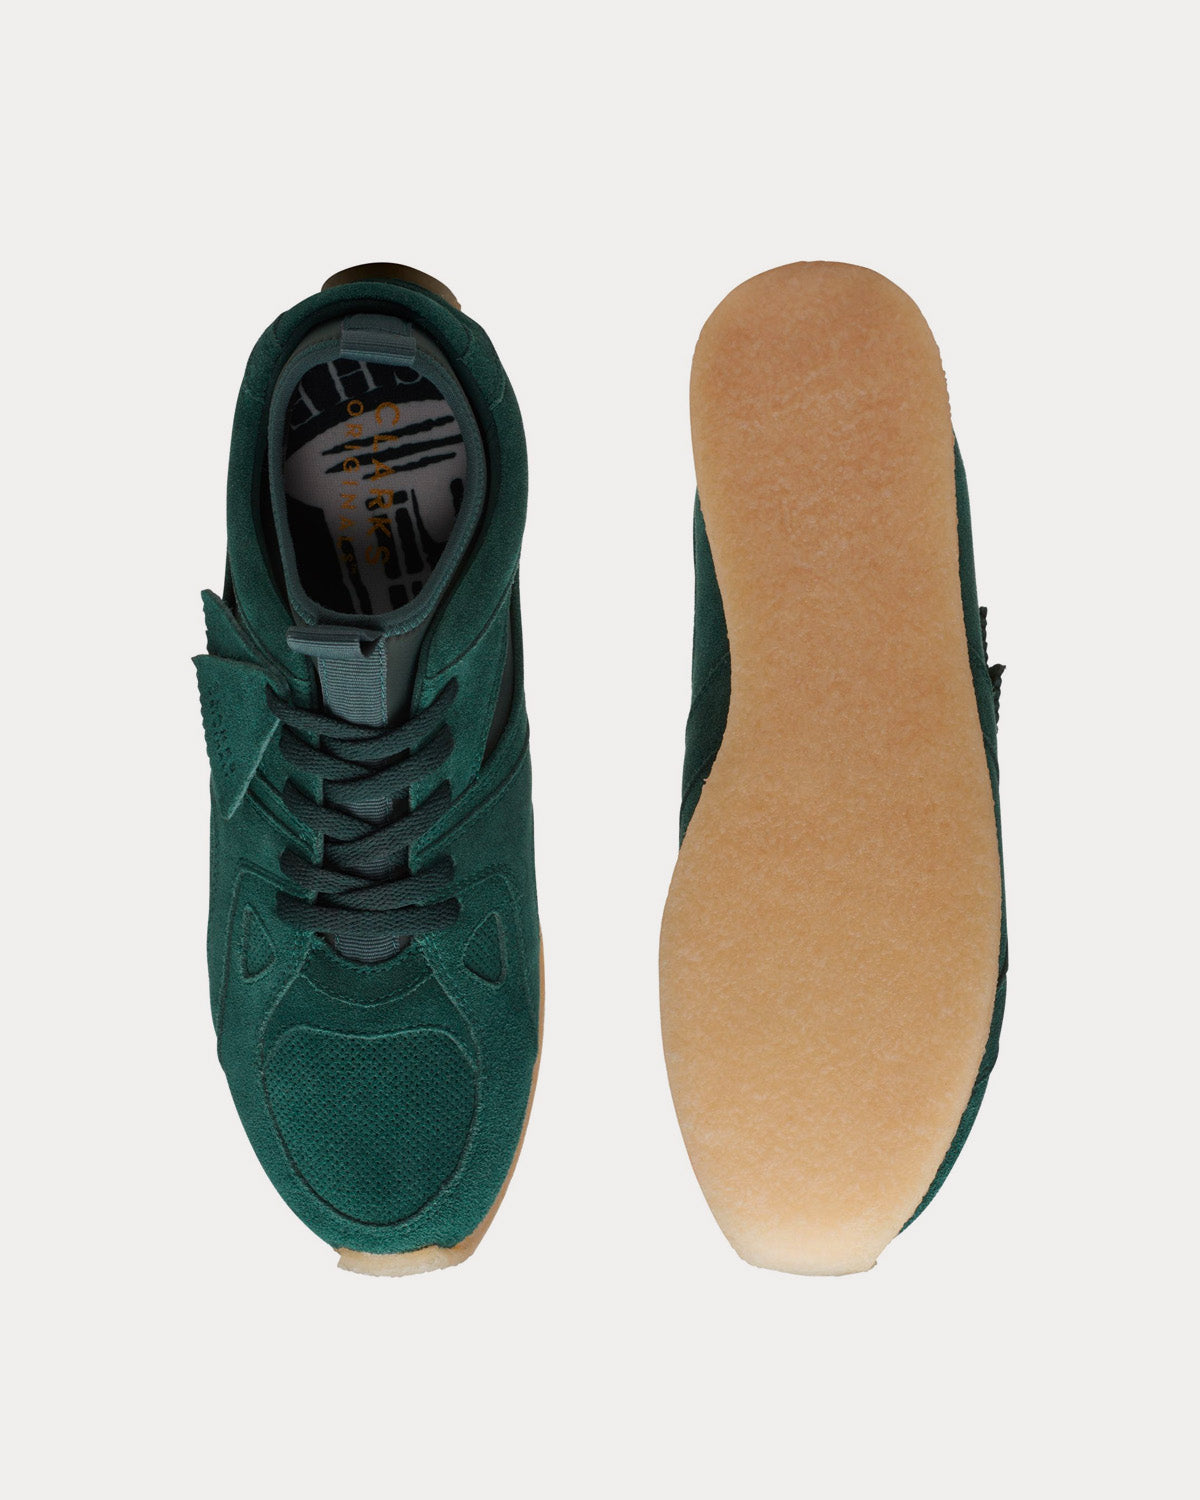 Clarks x Kith - Breacon Dark Green High Top Sneakers